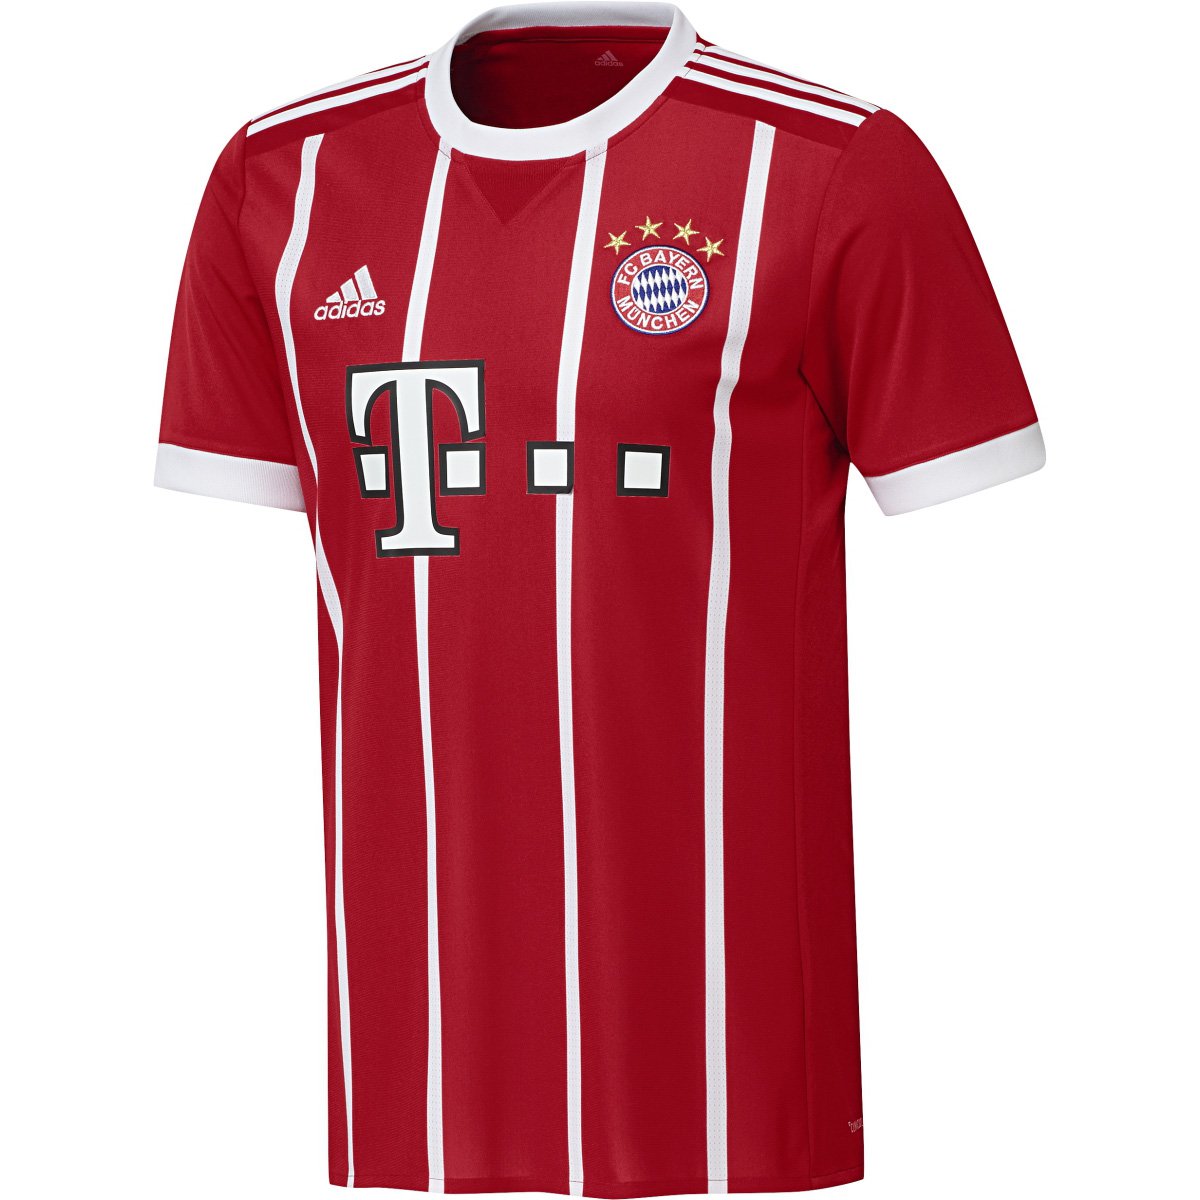 Jersey Bayern Munich Local / Replica Adidas - Caballero